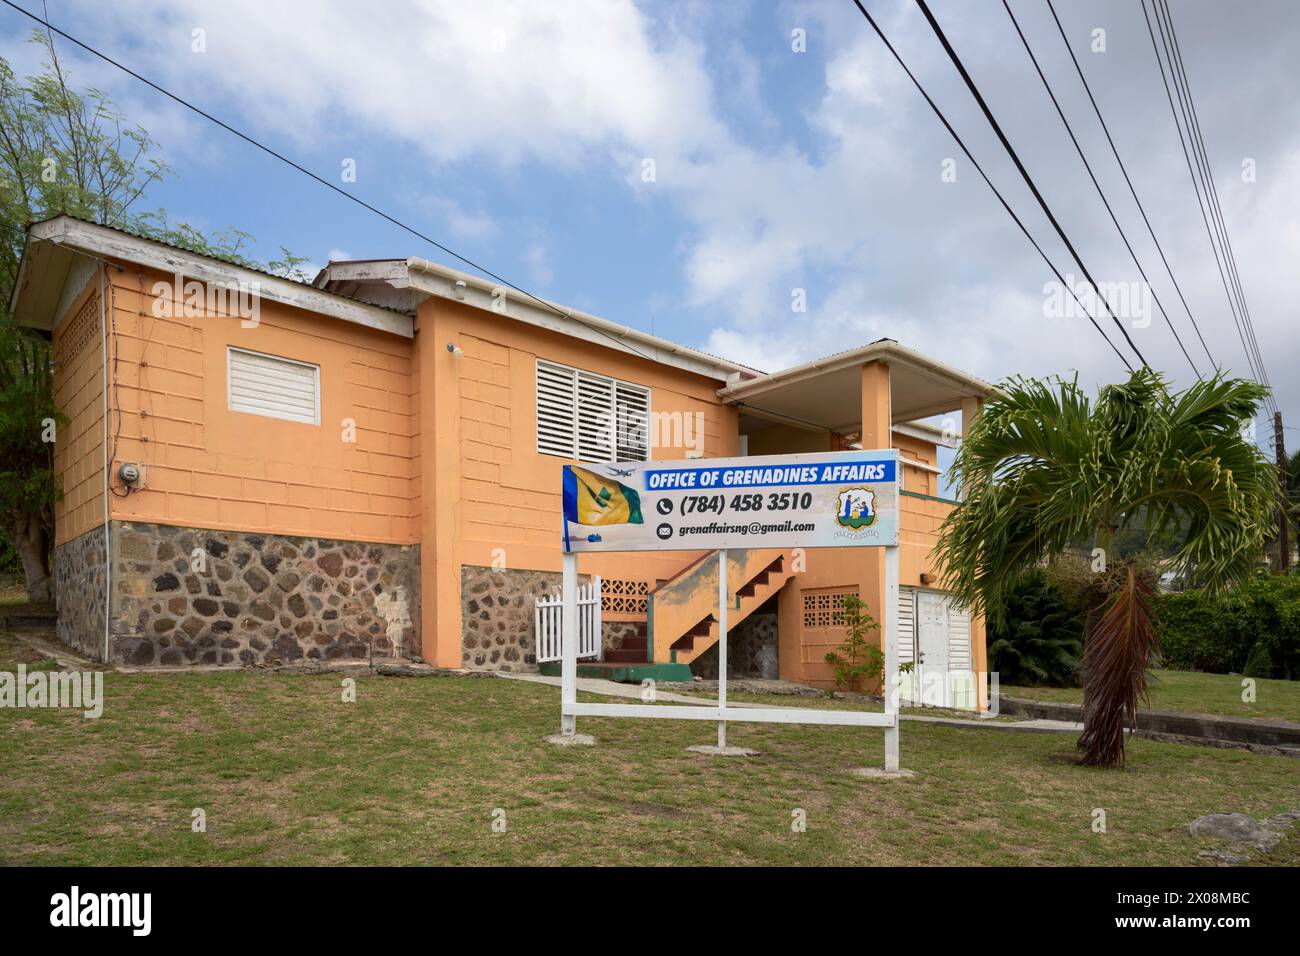 Bequia Office of Grenadine Affairs, Port Elizabeth, Bequia Island, St Vincent & the Grenadines, Caribbean Stock Photo